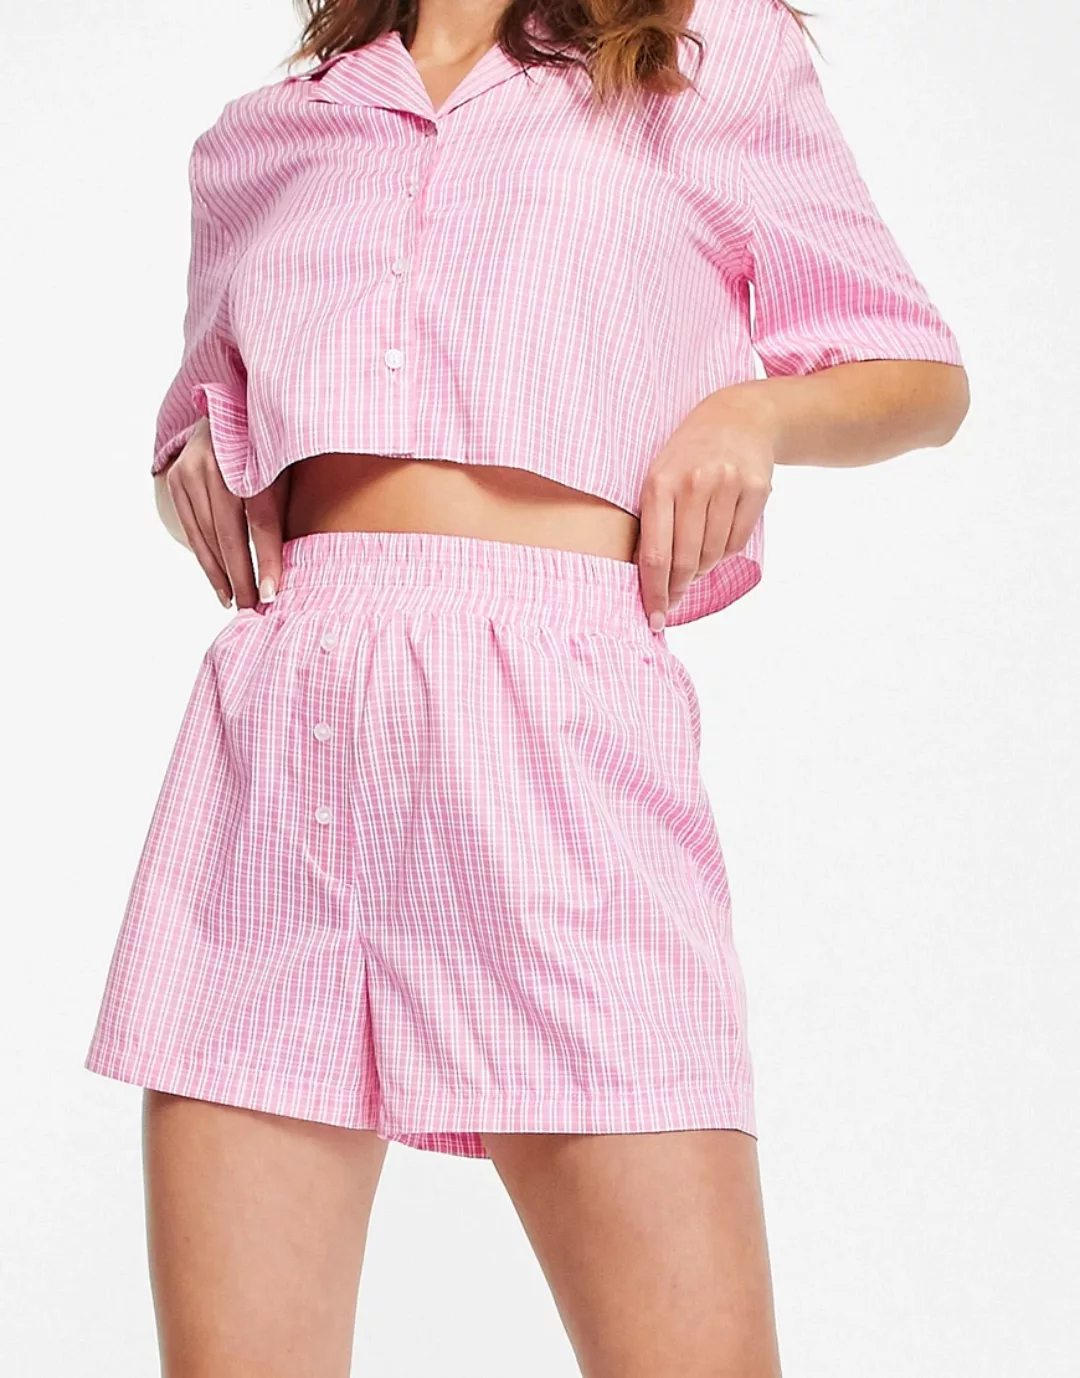 ASOS DESIGN – Gewebte Pyjama-Boxershorts mit Karomuster in Rosa günstig online kaufen